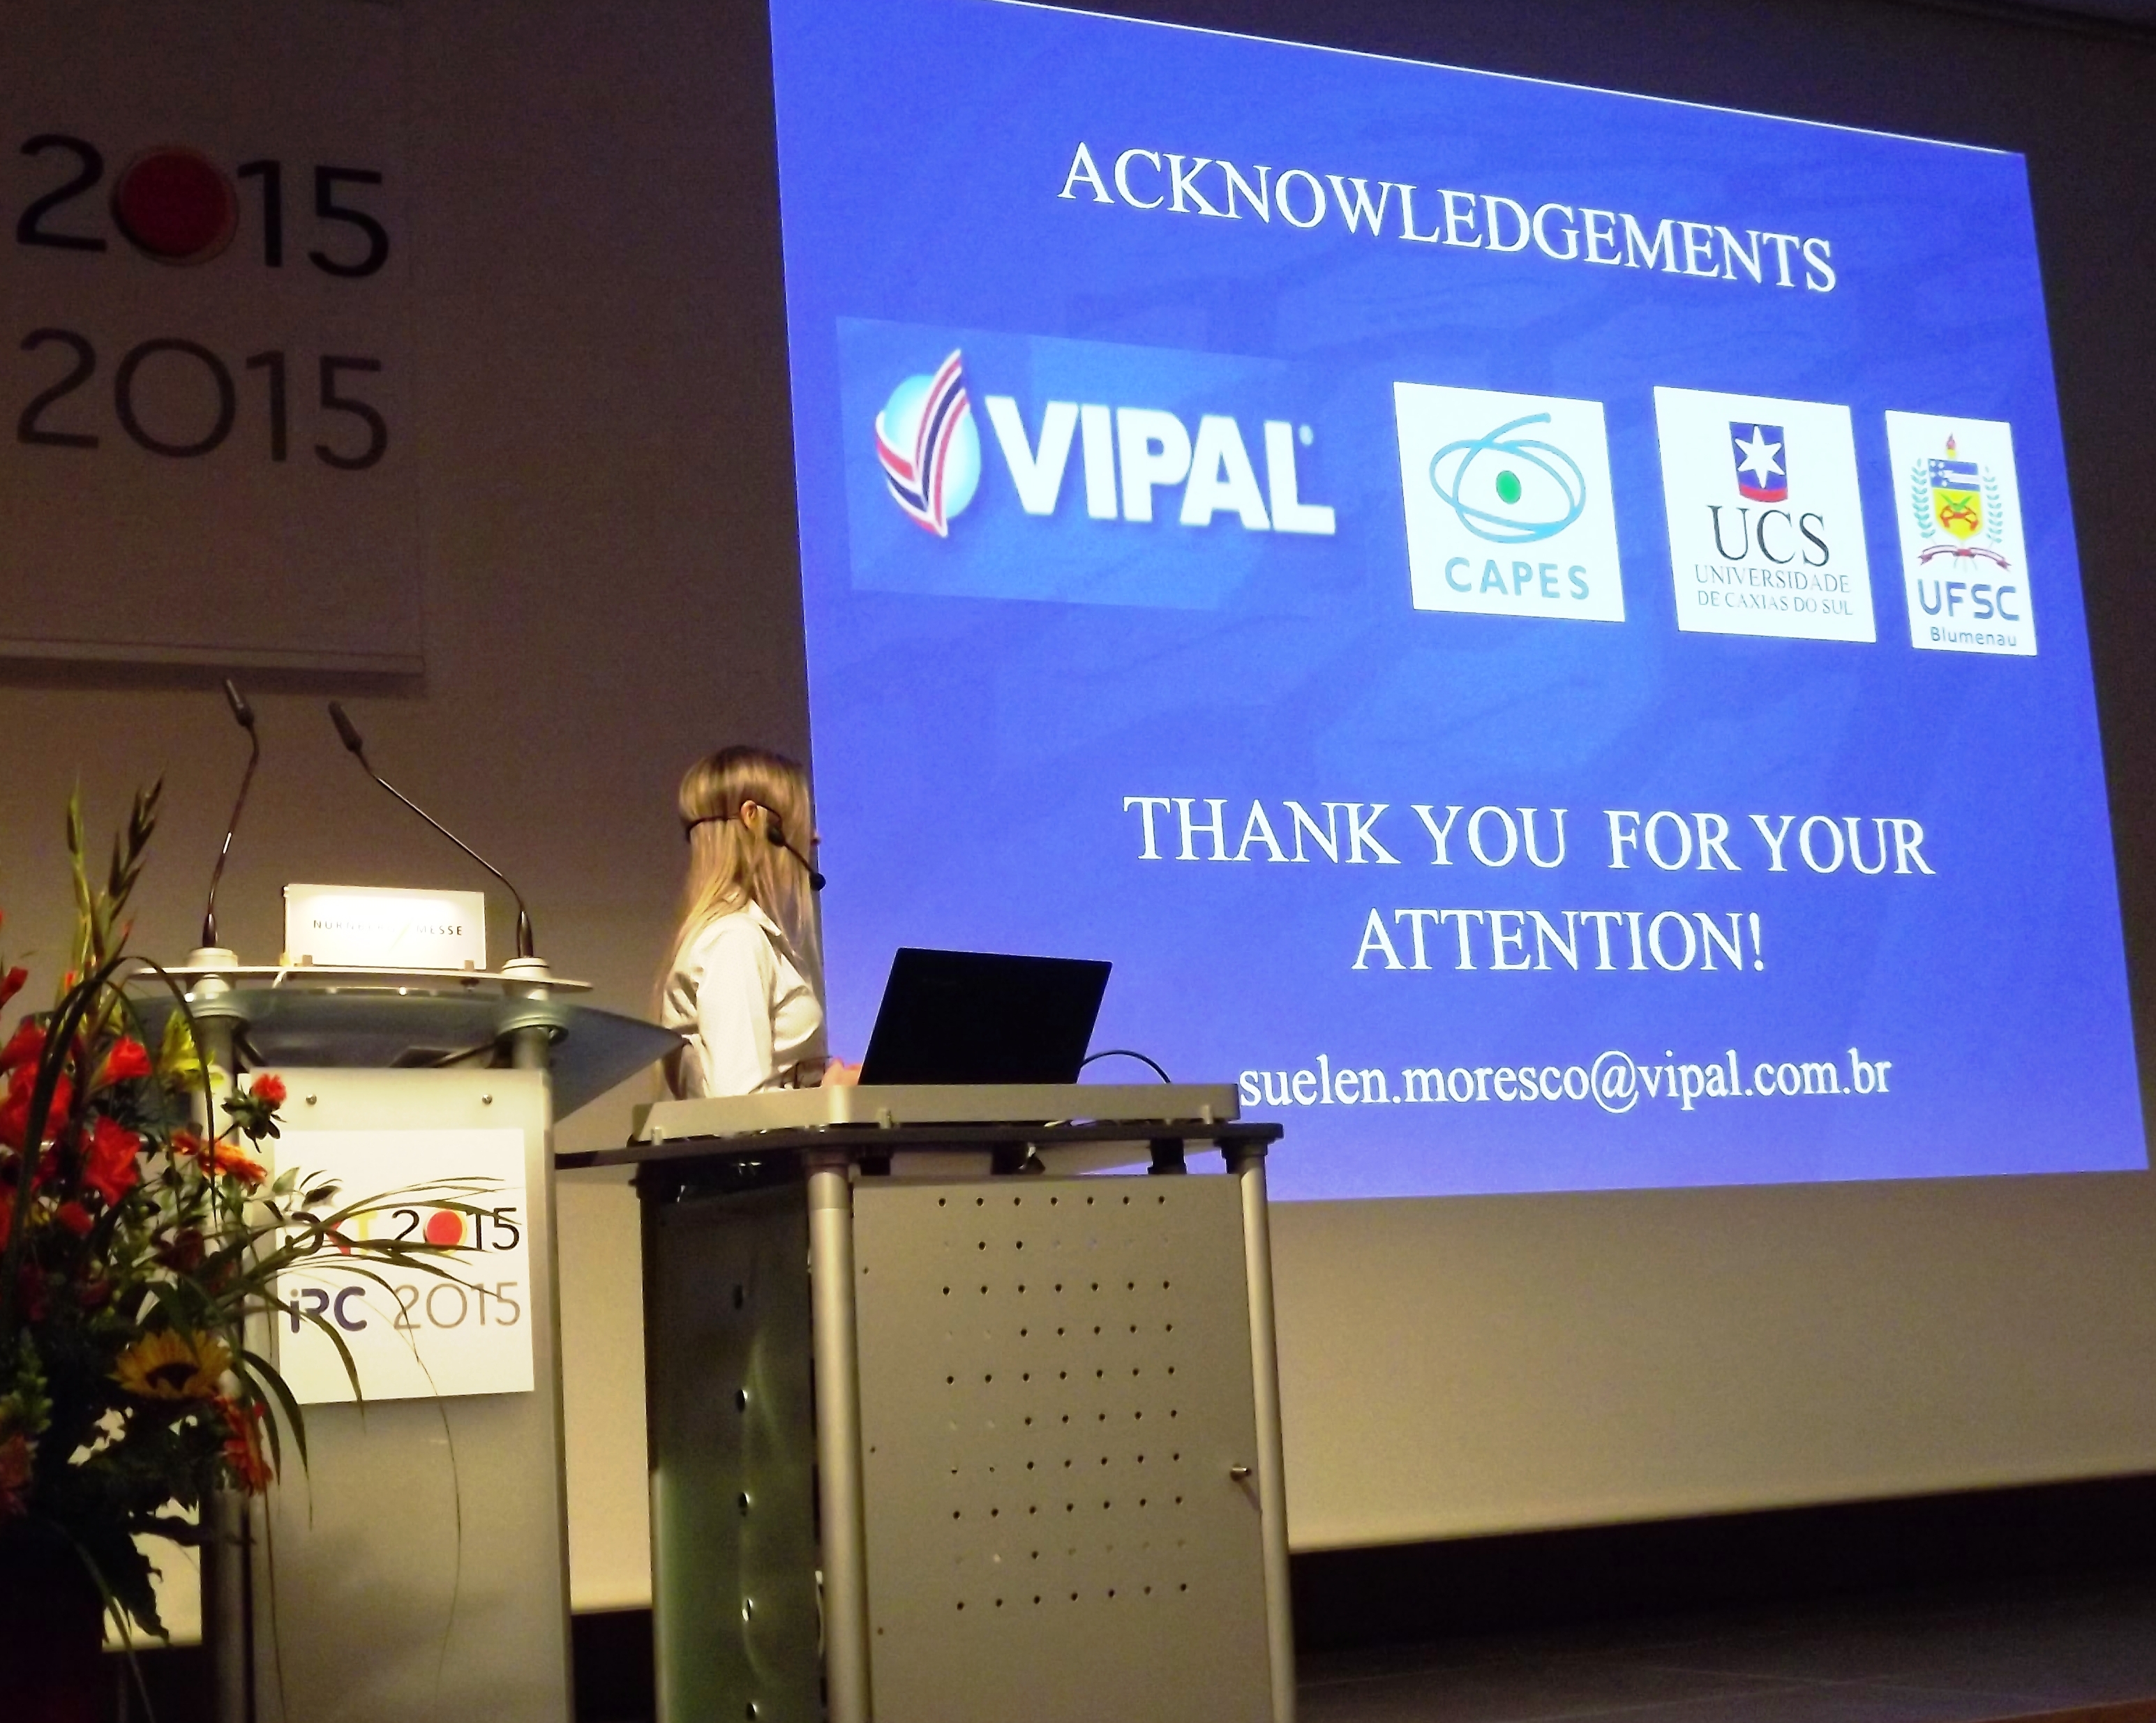 Vipal gives “reusing raw materials” presentation at Rubber Conference 2015